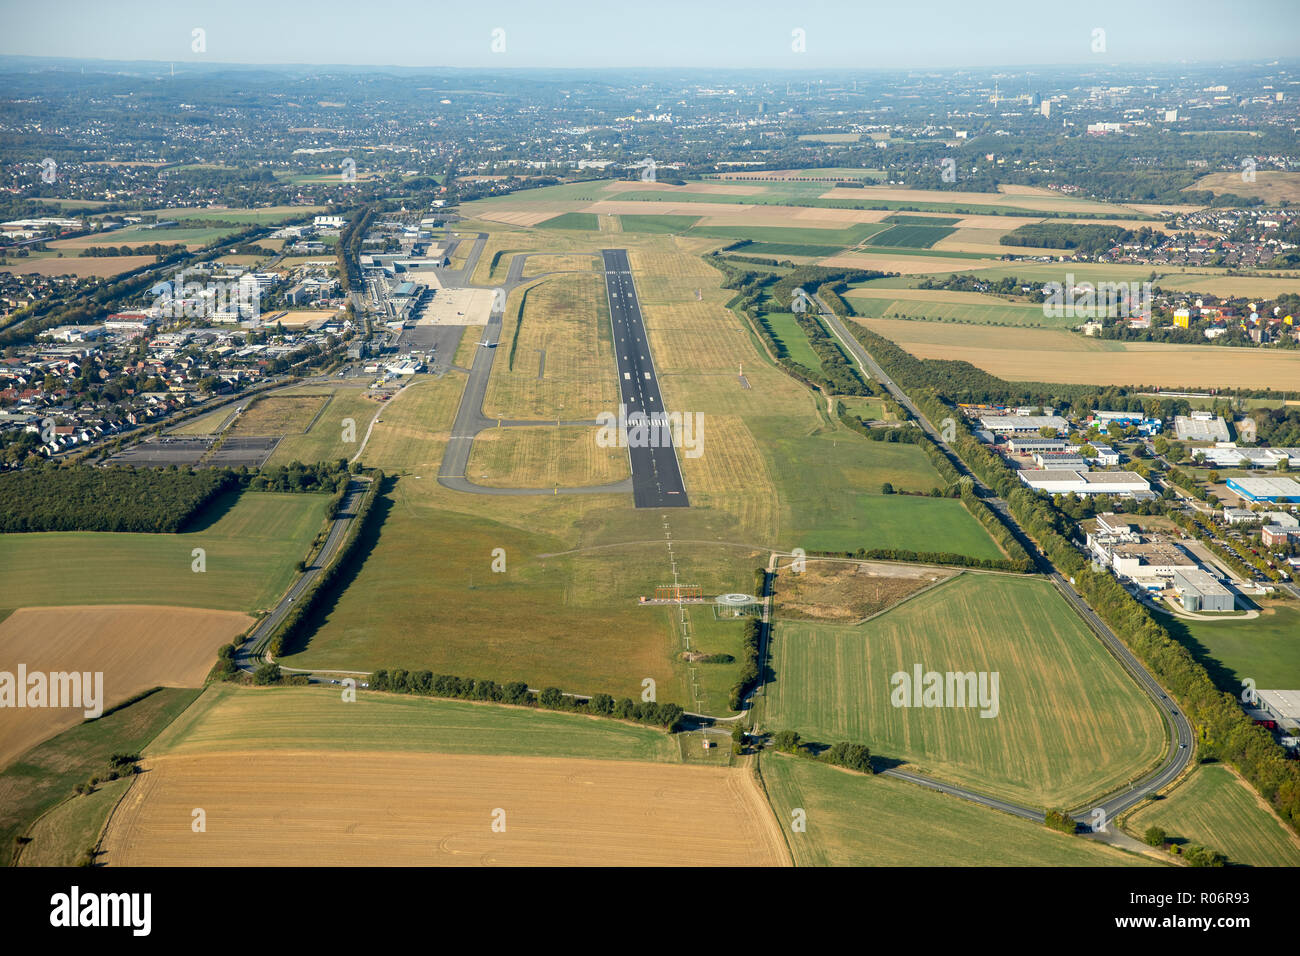 Airport Dortmund, runway 24, runway 24, noise problems, taxiways, Wickeder Chaussee, Dortmund, regional airport, airfield, airport,, Ruhrgebiet, North Stock Photo